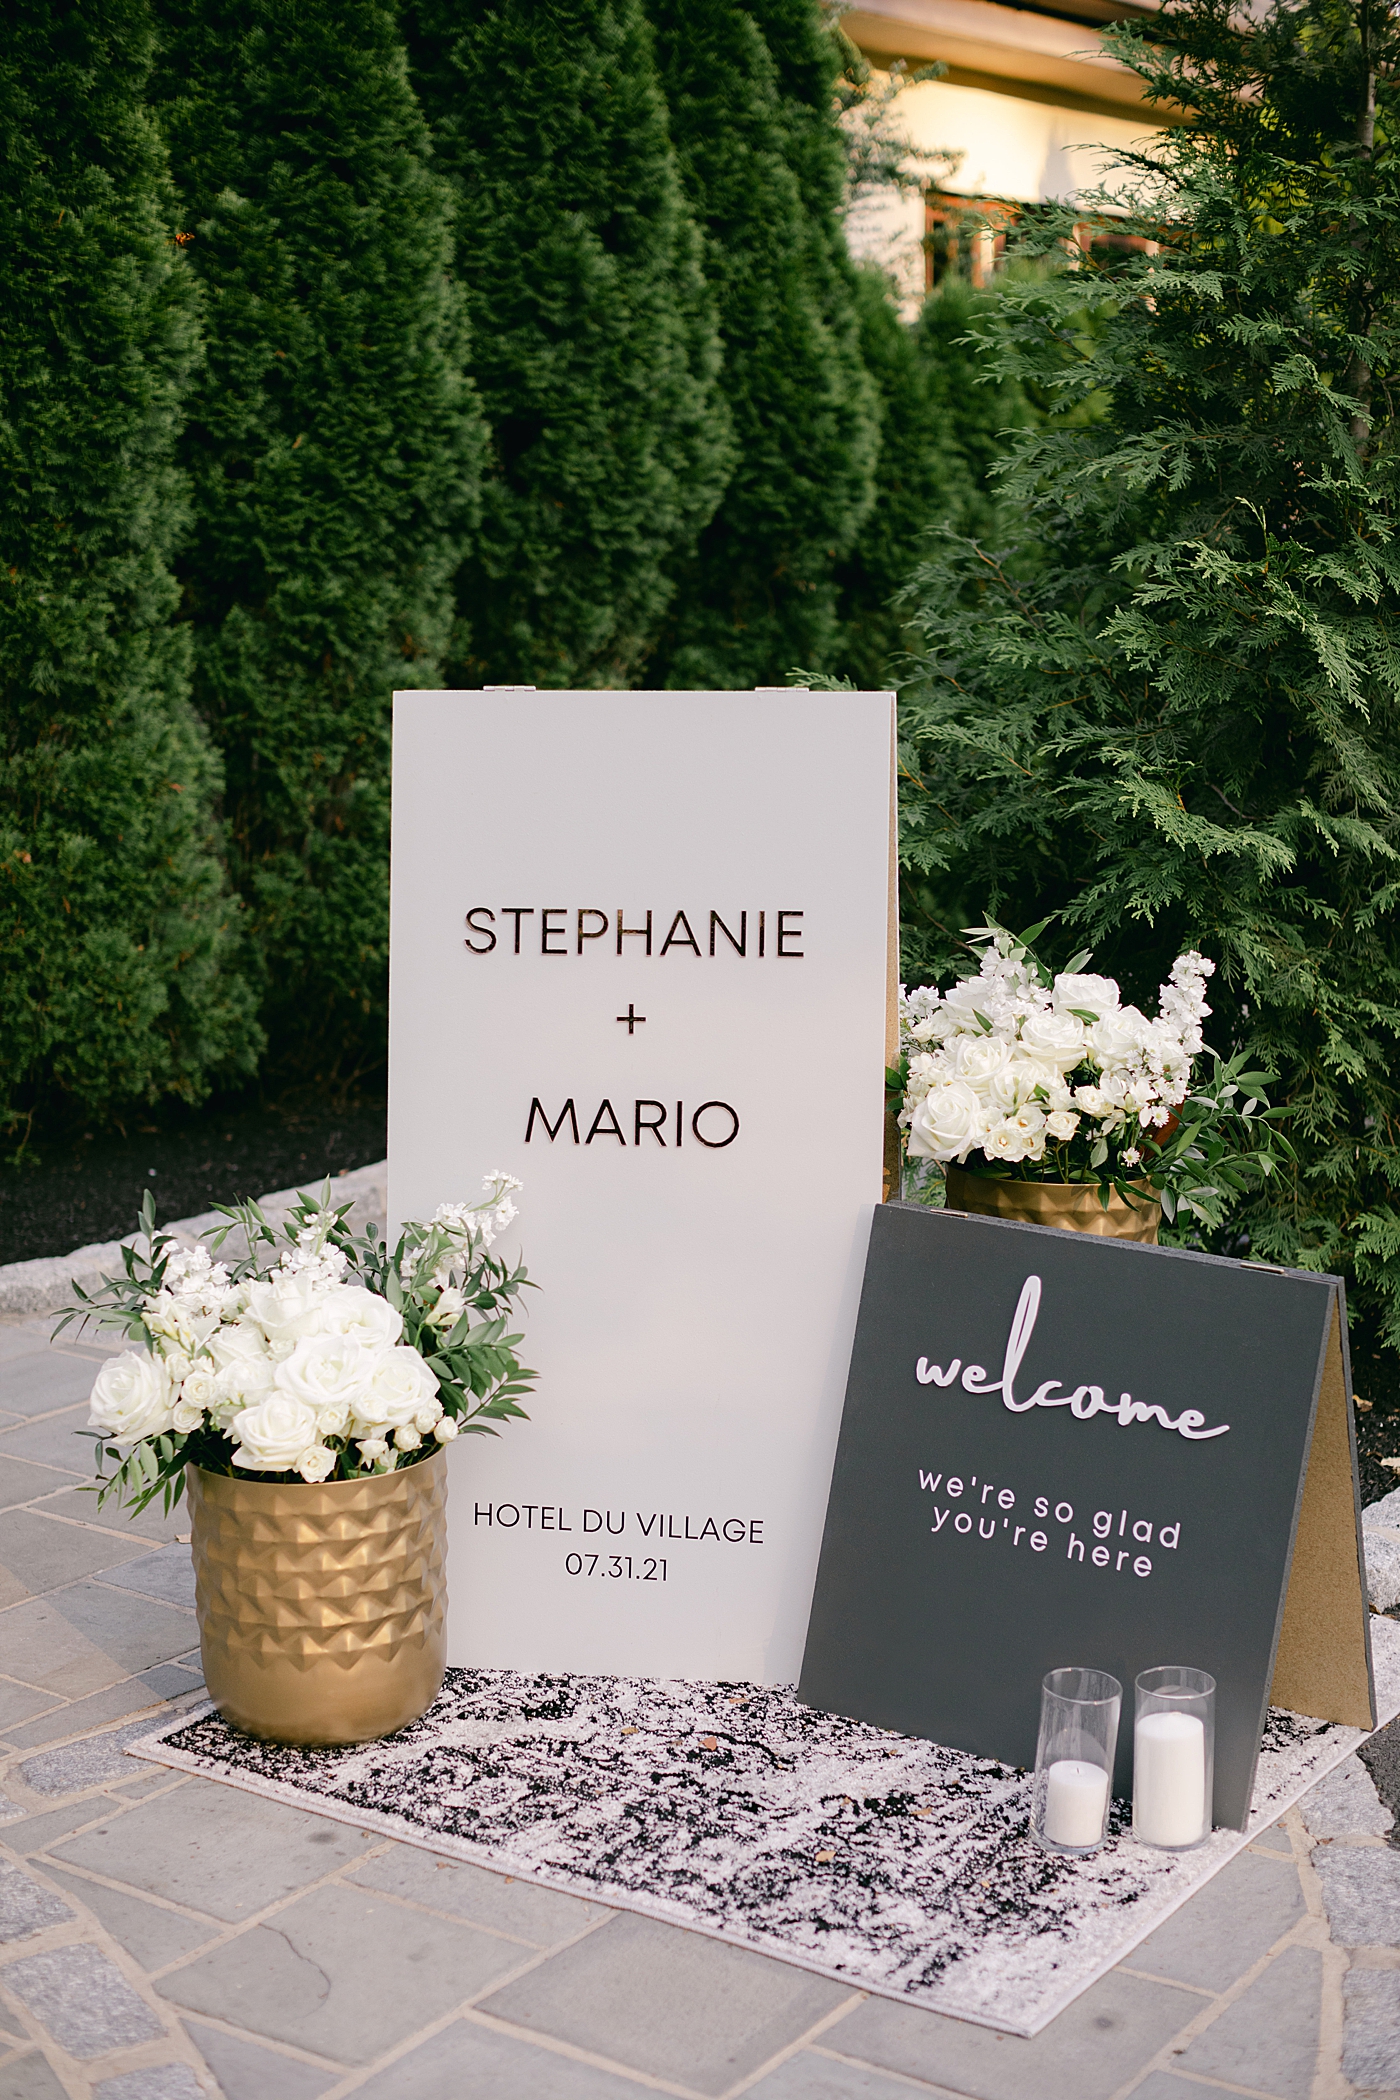 Black and white wedding signage | Image by Hope Helmuth Photography